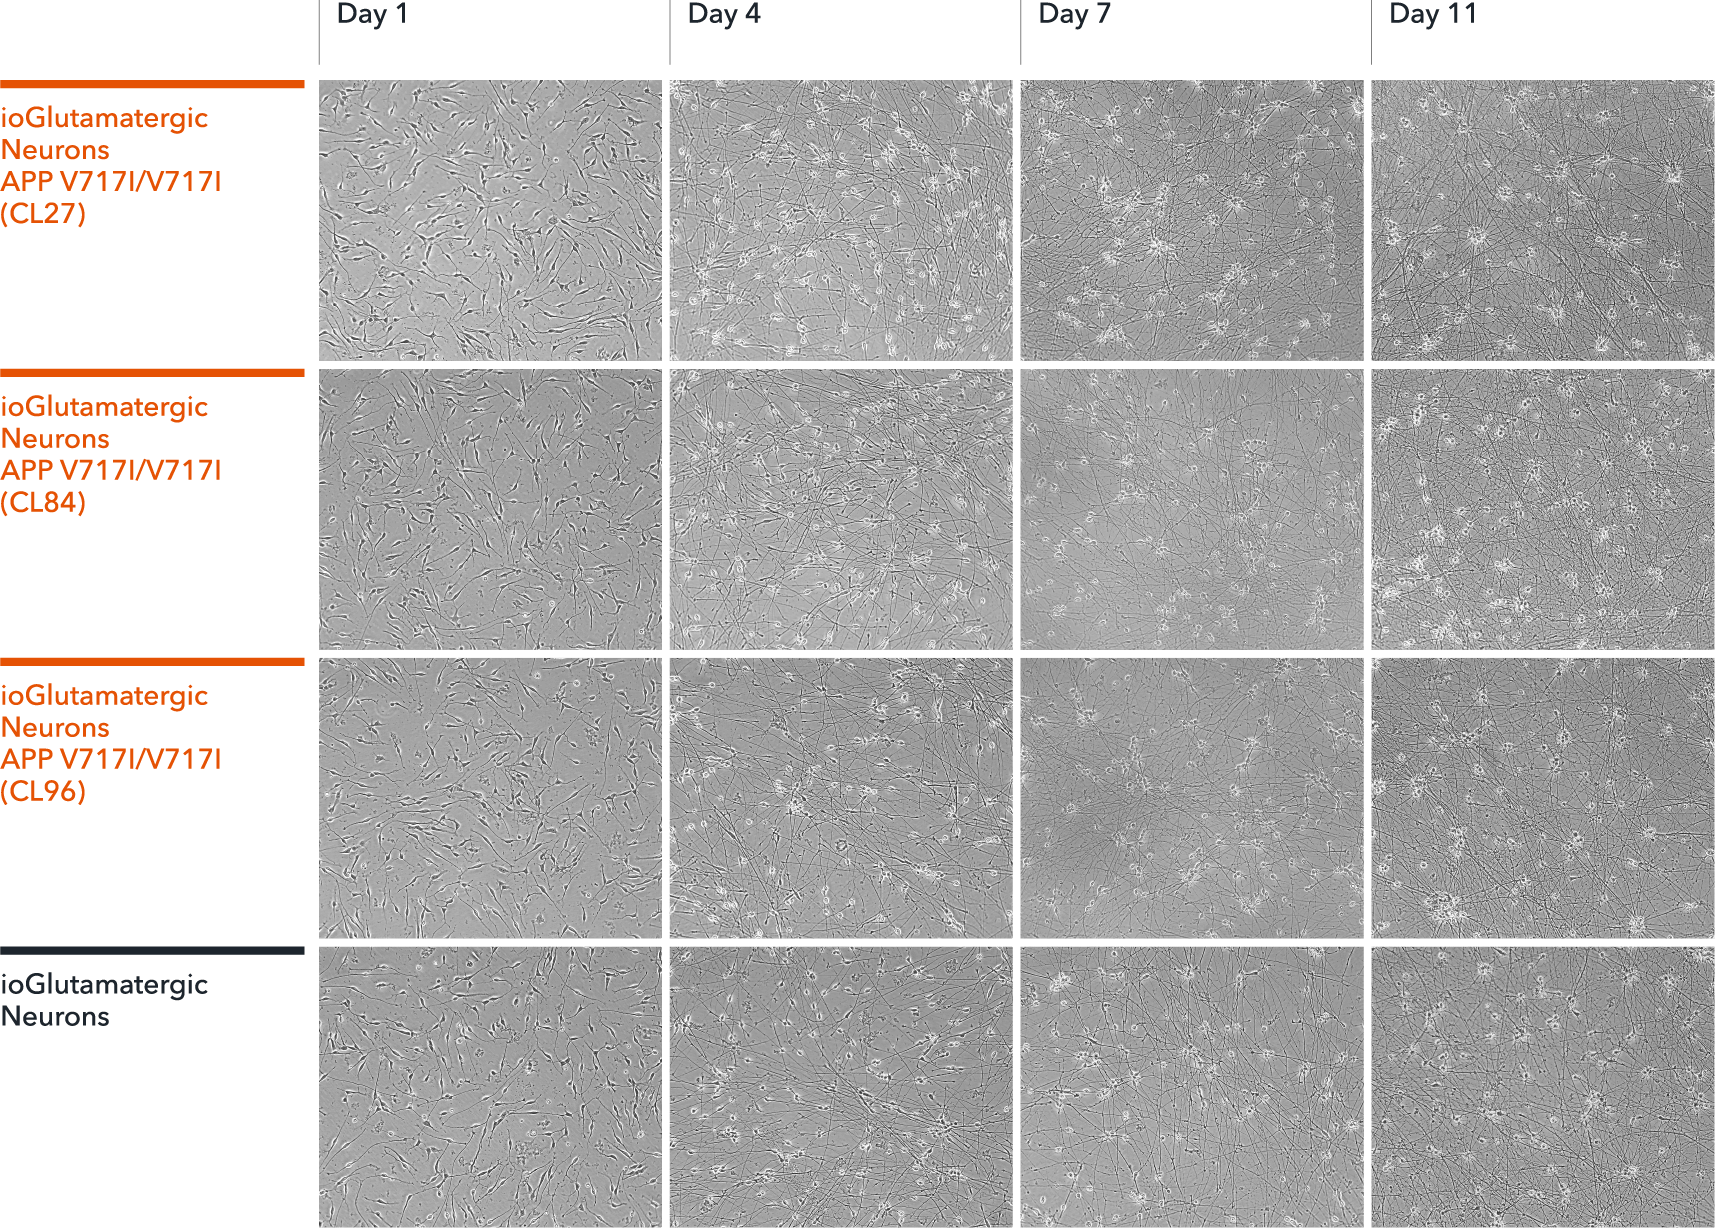 ioGlutamatergic Neurons APP V717I/V717I morphology from day1 to 11 post-thaw.